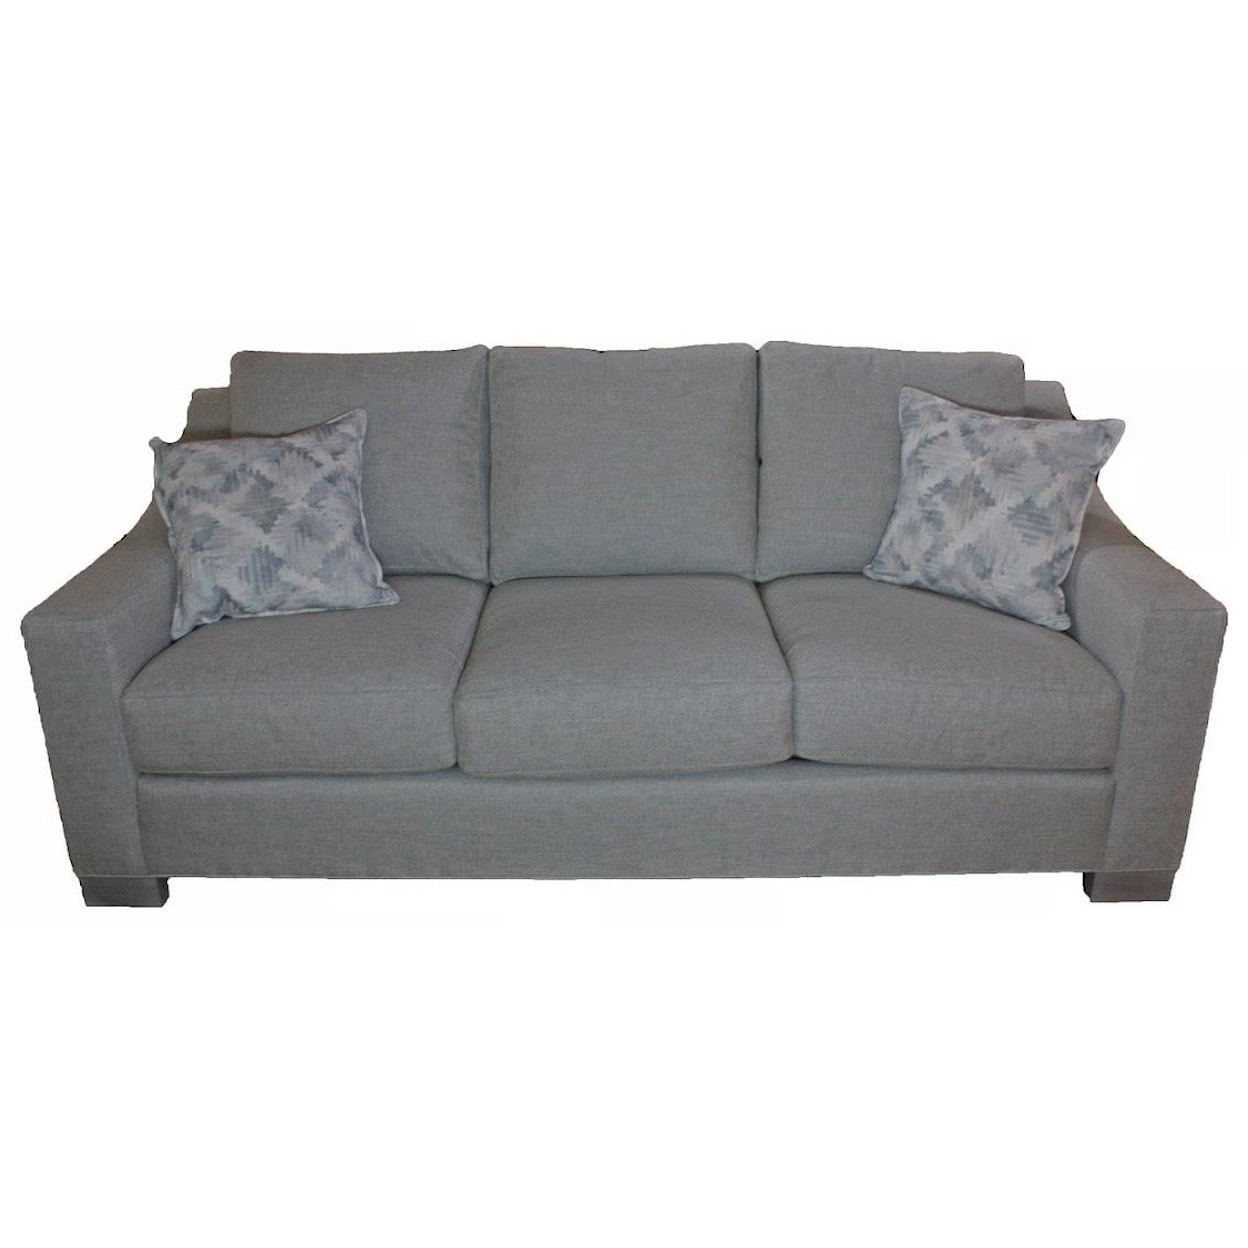 Vanguard Furniture Envision Custom Upholstery 3 Seat Sofa